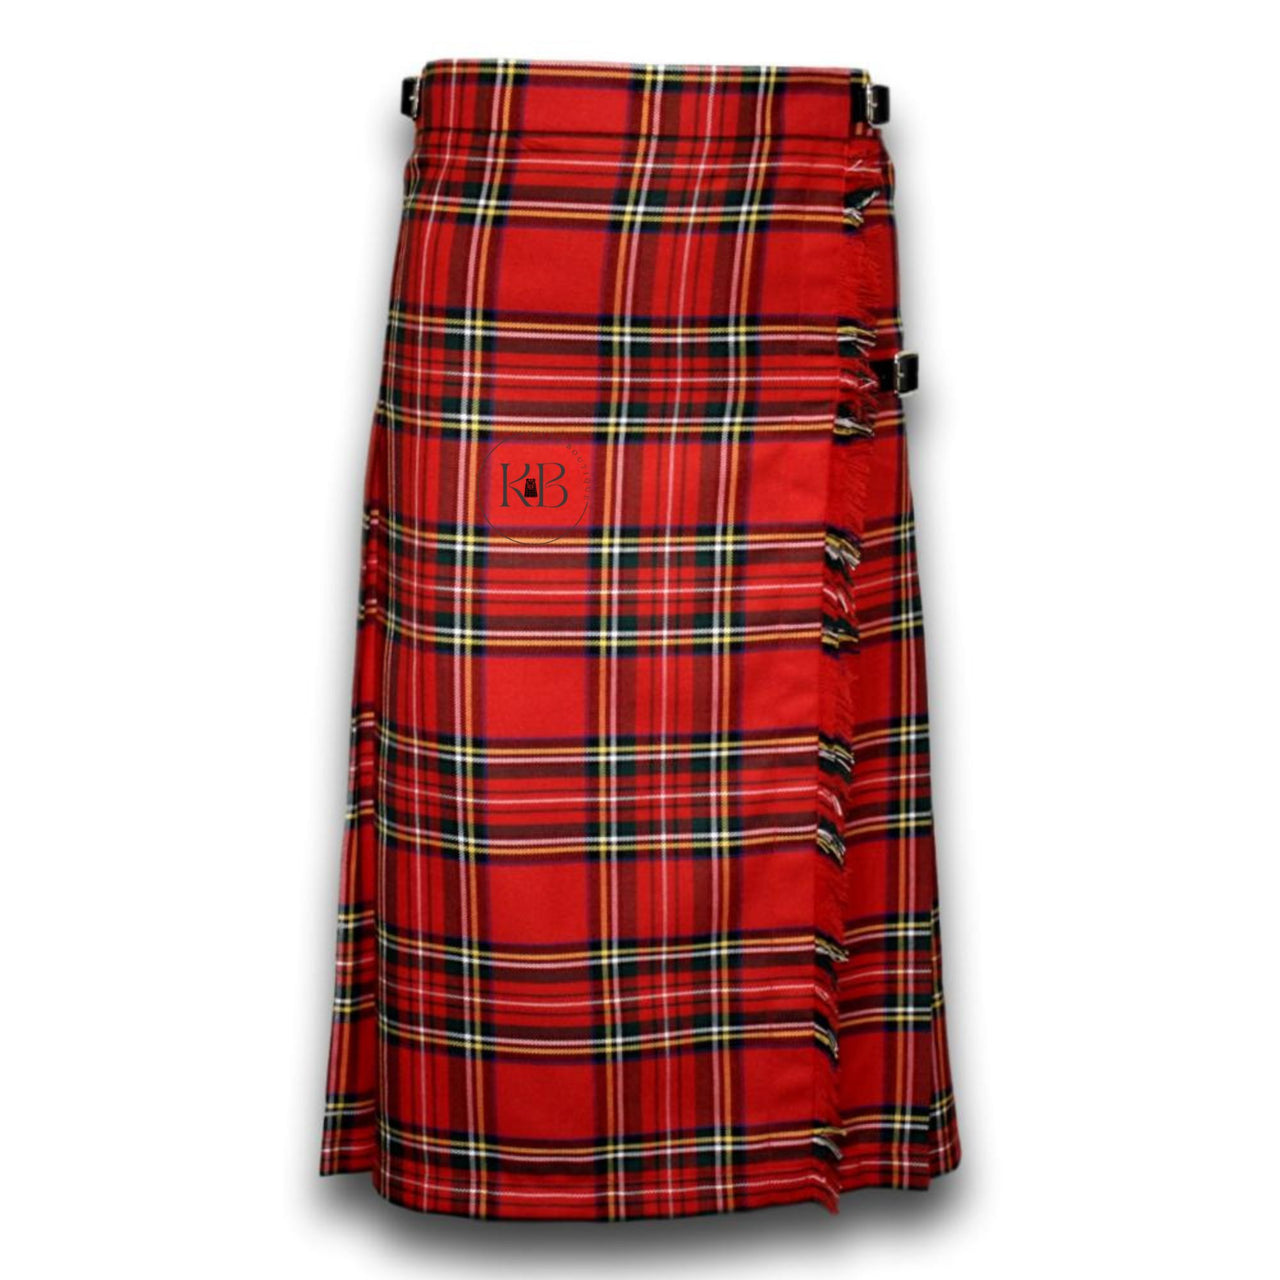 Ladies Tartan Kilted Full Length Kilted Hostess Tartan Skirt Length 38 inches